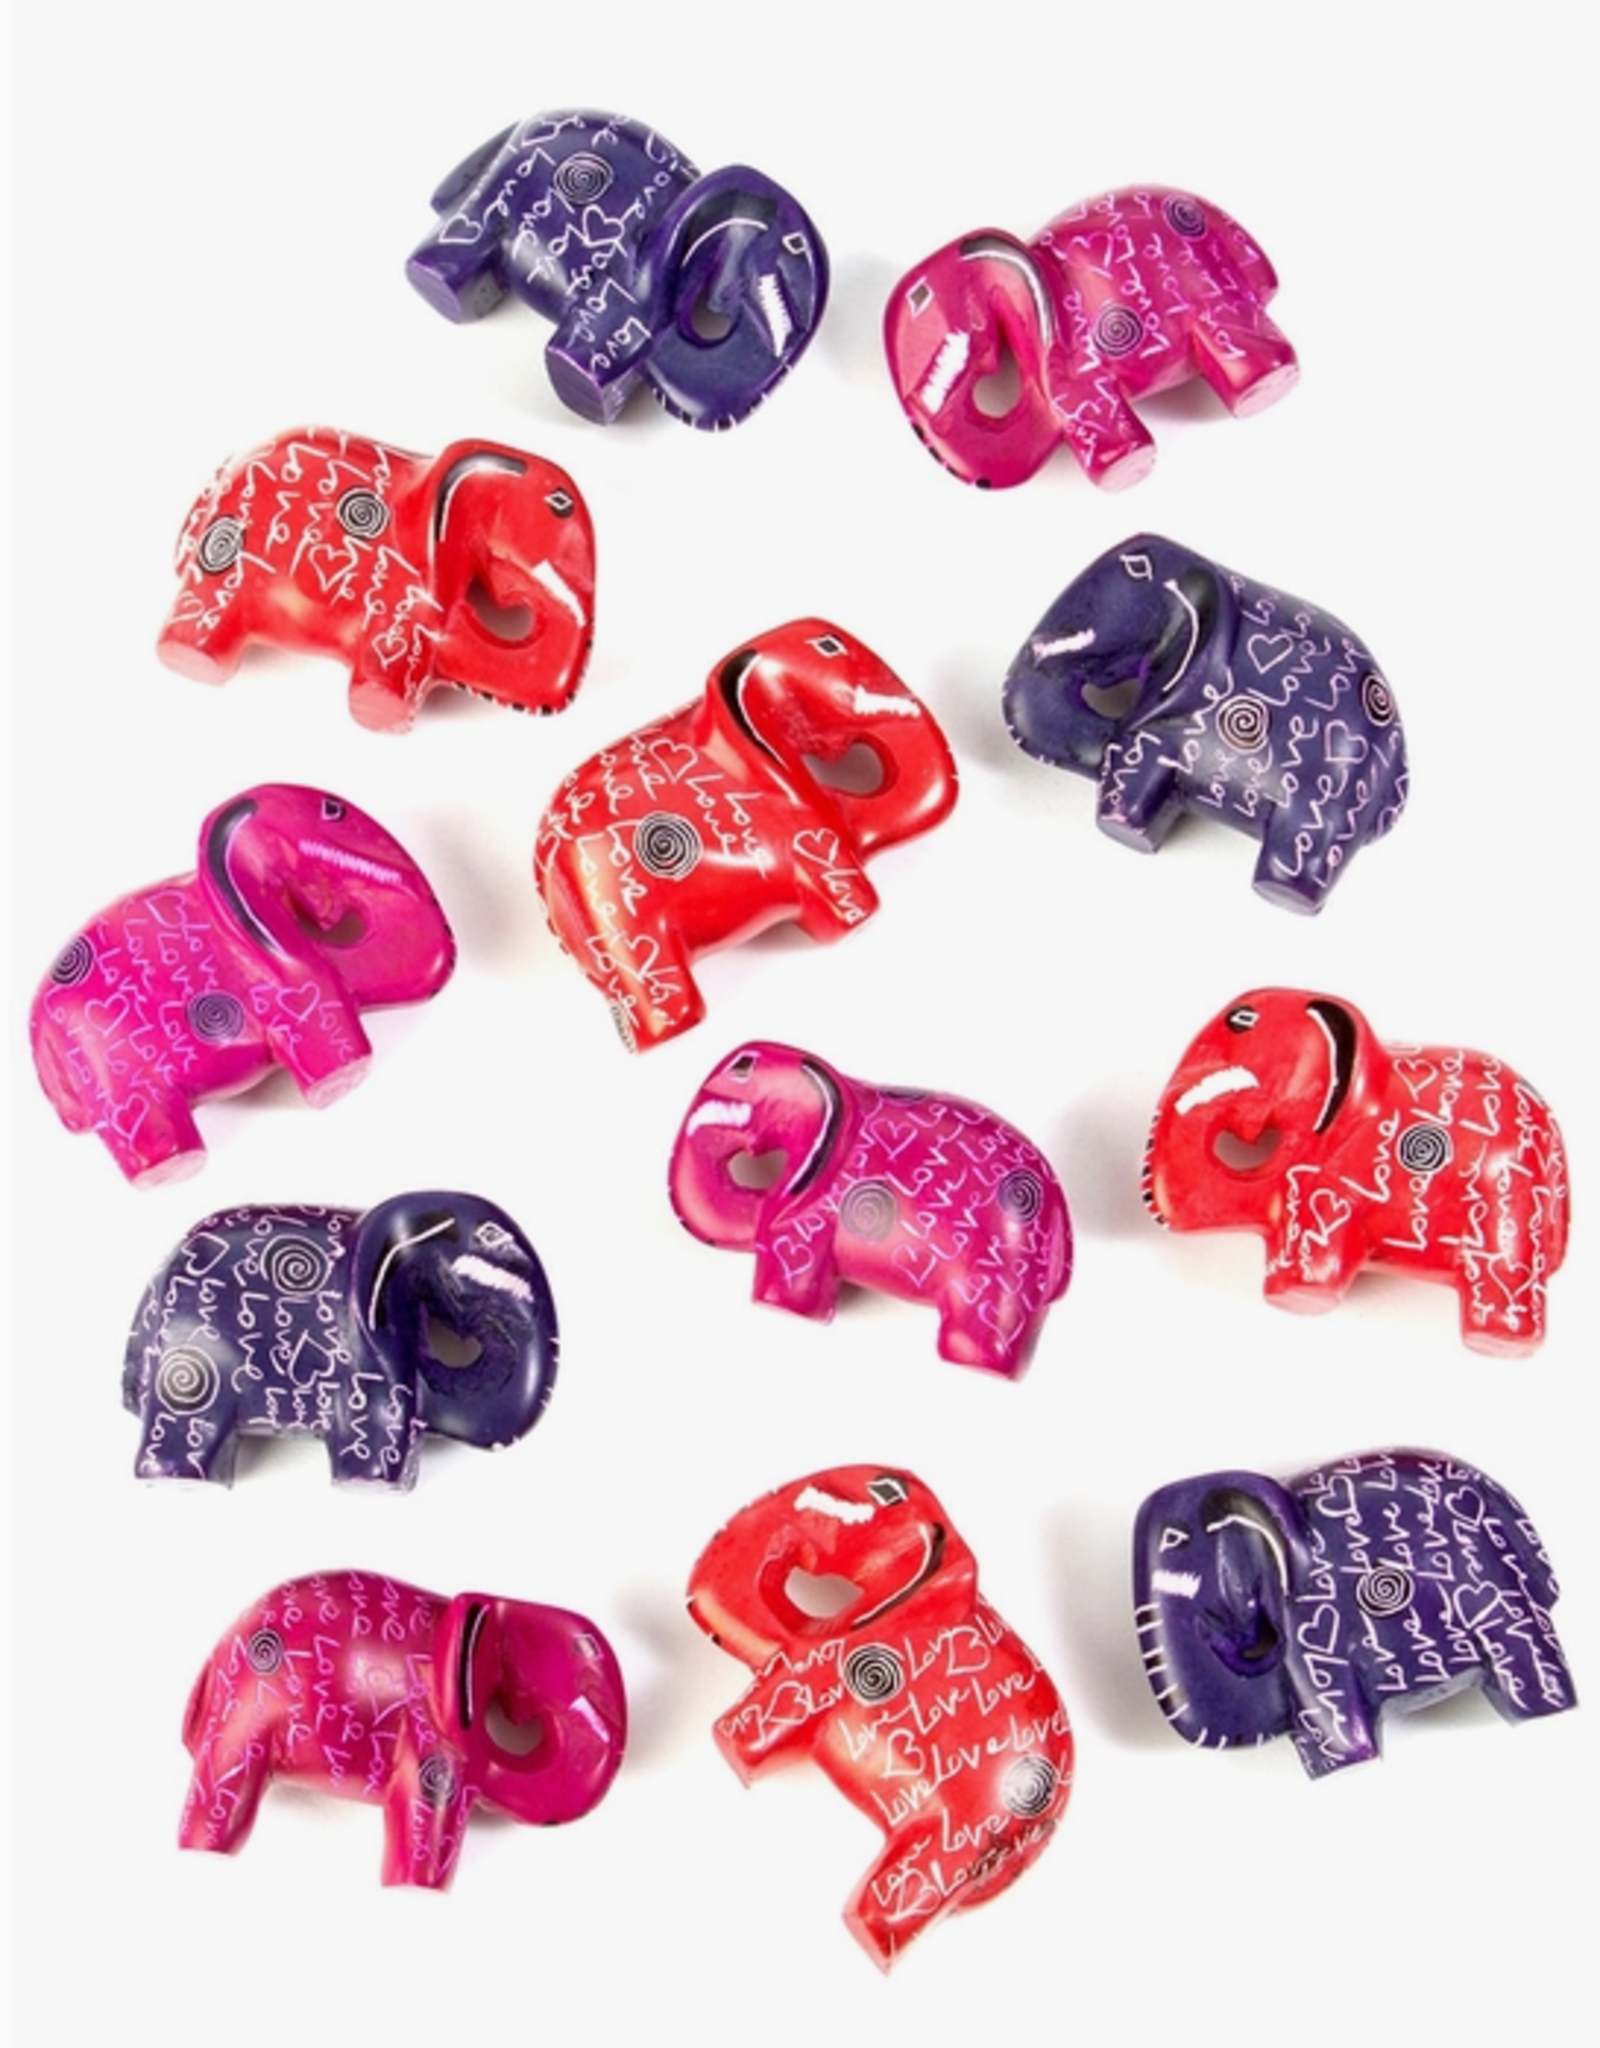 Global Crafts Assorted Love Miniature Soapstone Elephants